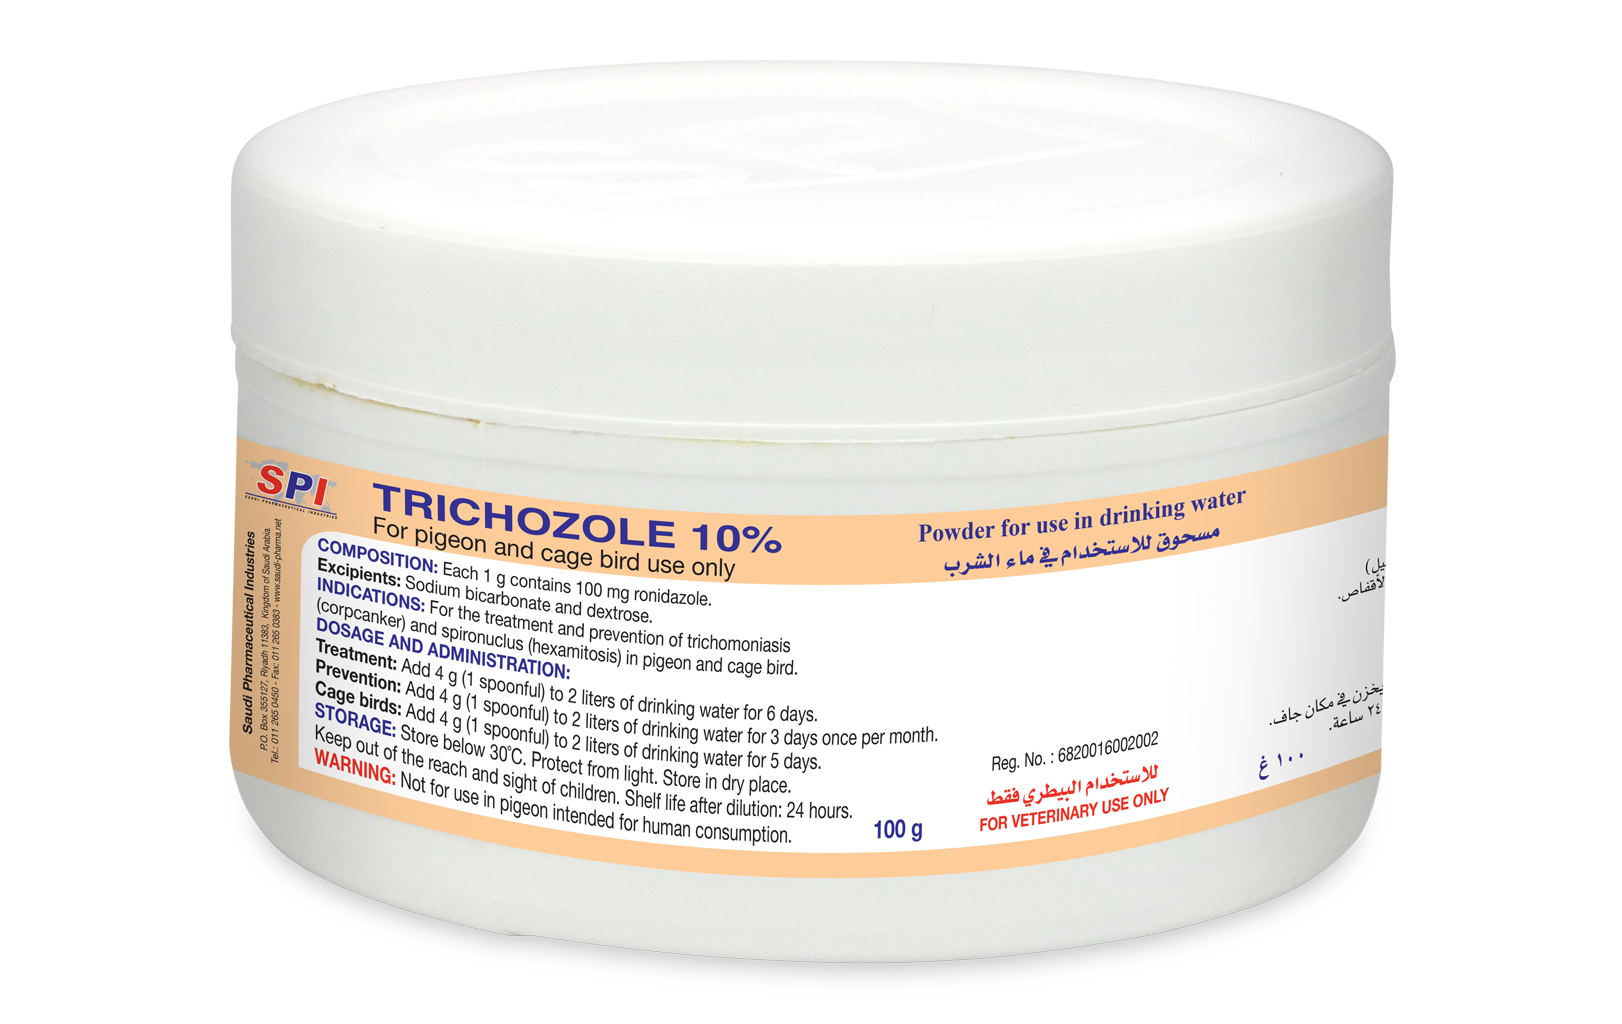 Trichozole 10% 100 g